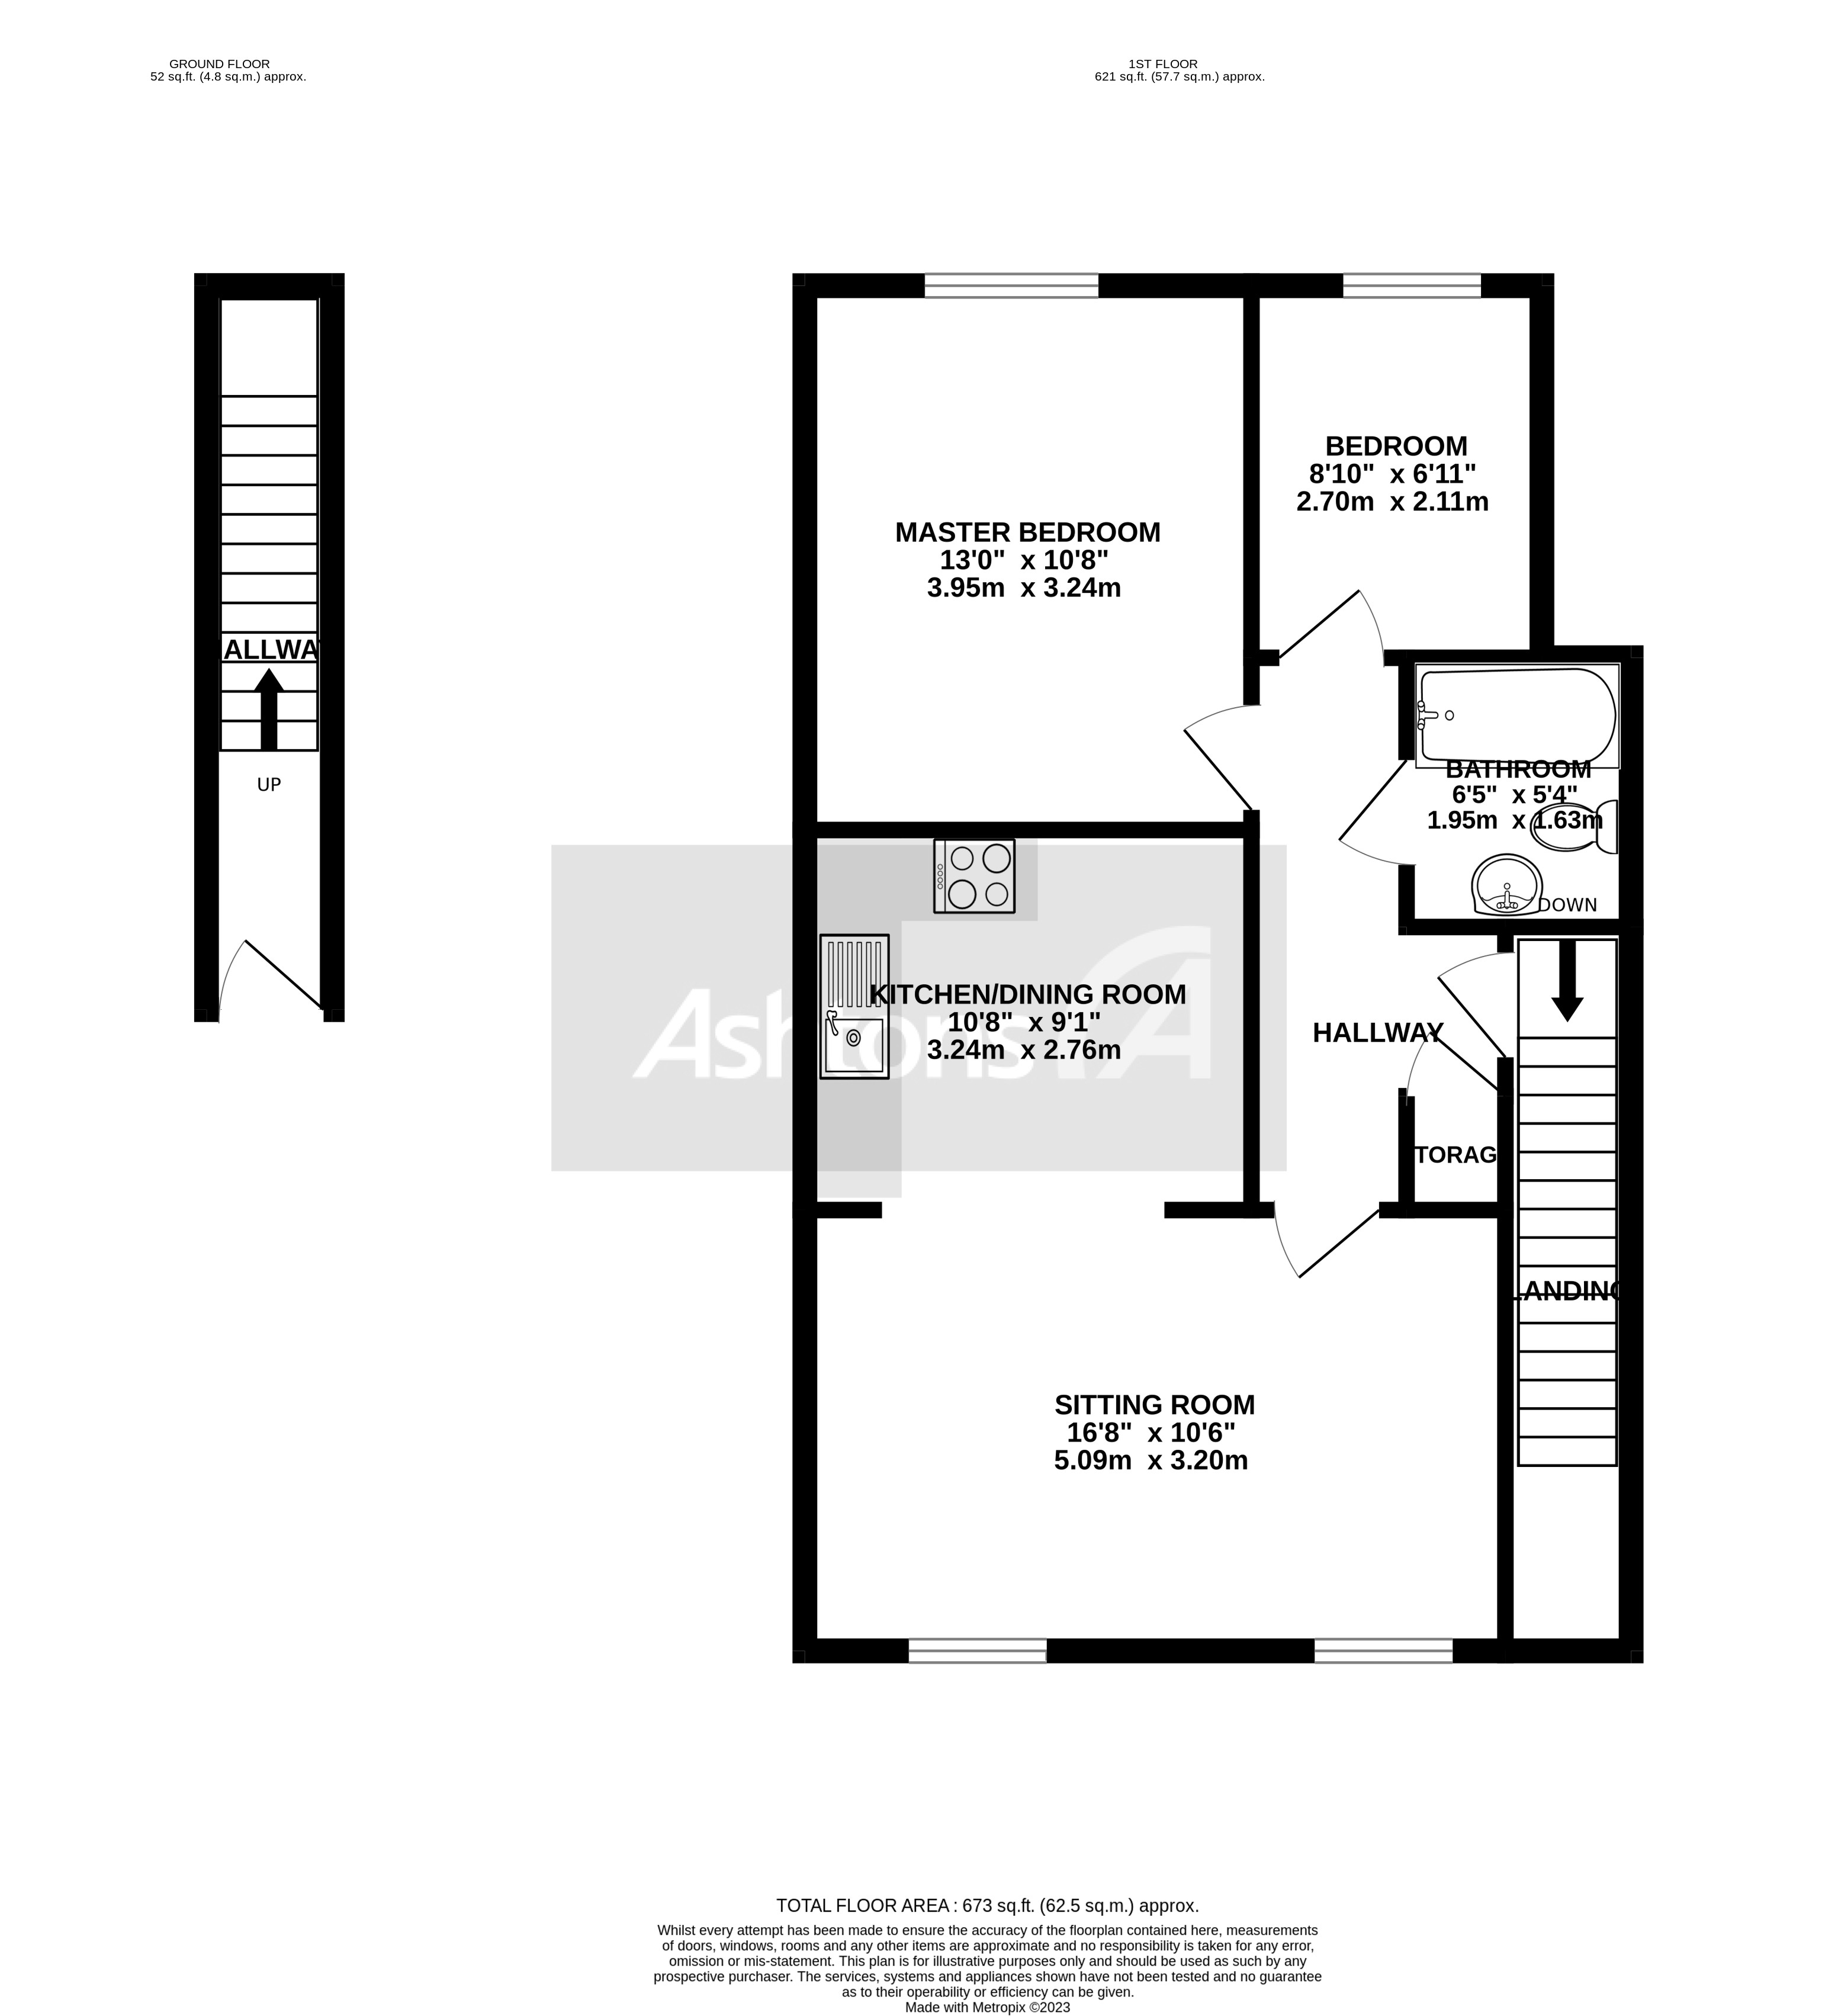 Flat 2, Warrington Floor Plan